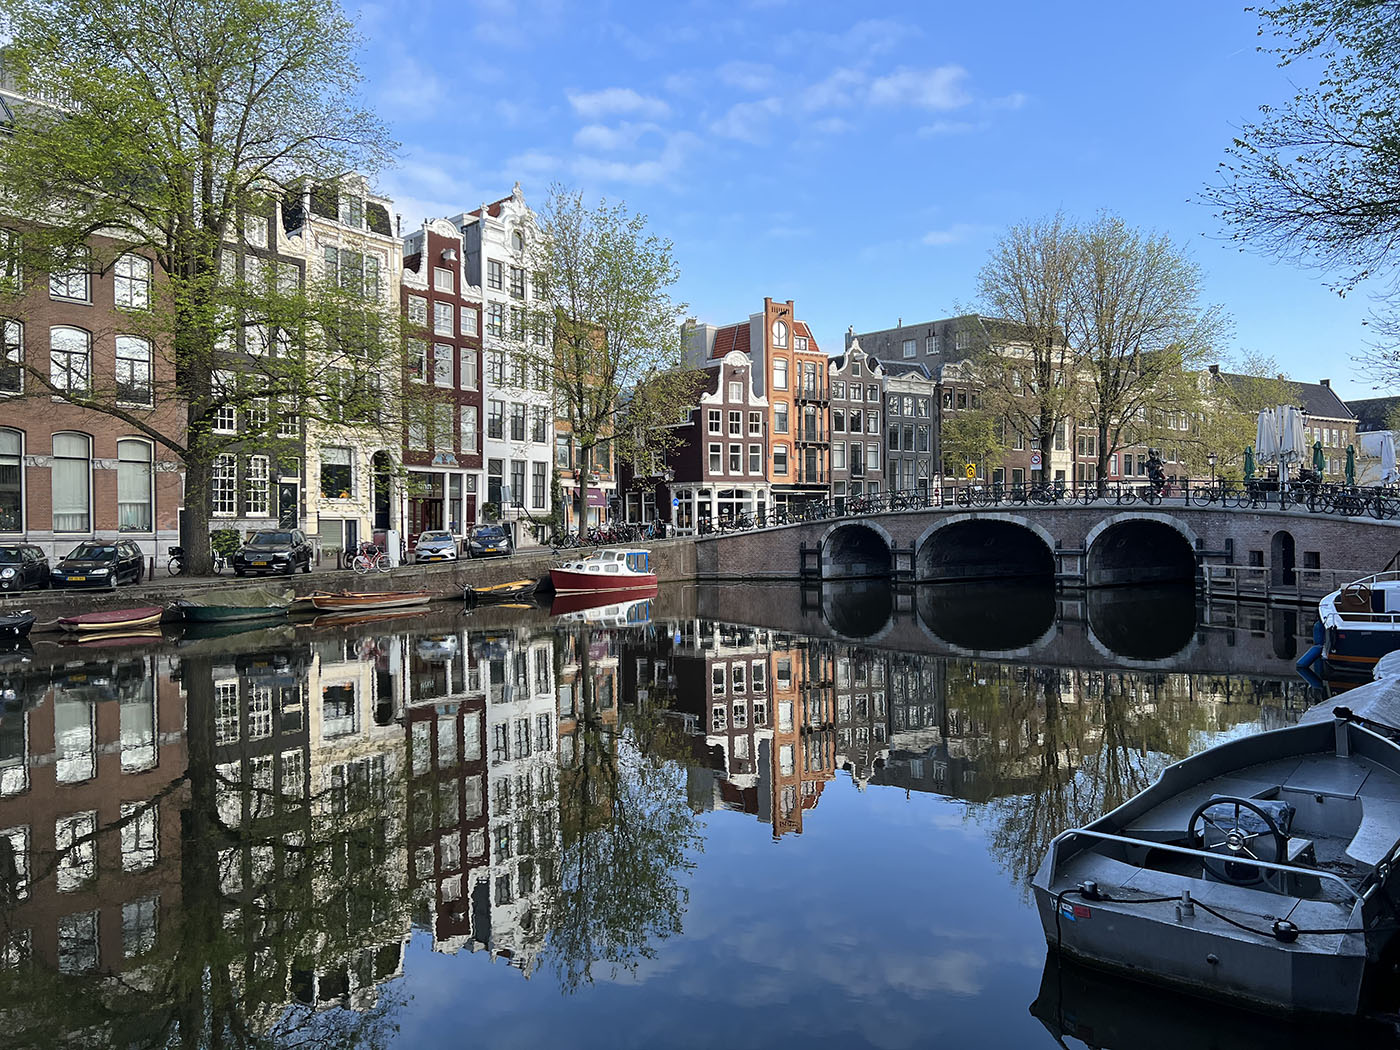 View of the Singel canal. Amsterdam, the Netherlands. Credit: Carolina Valenzuela